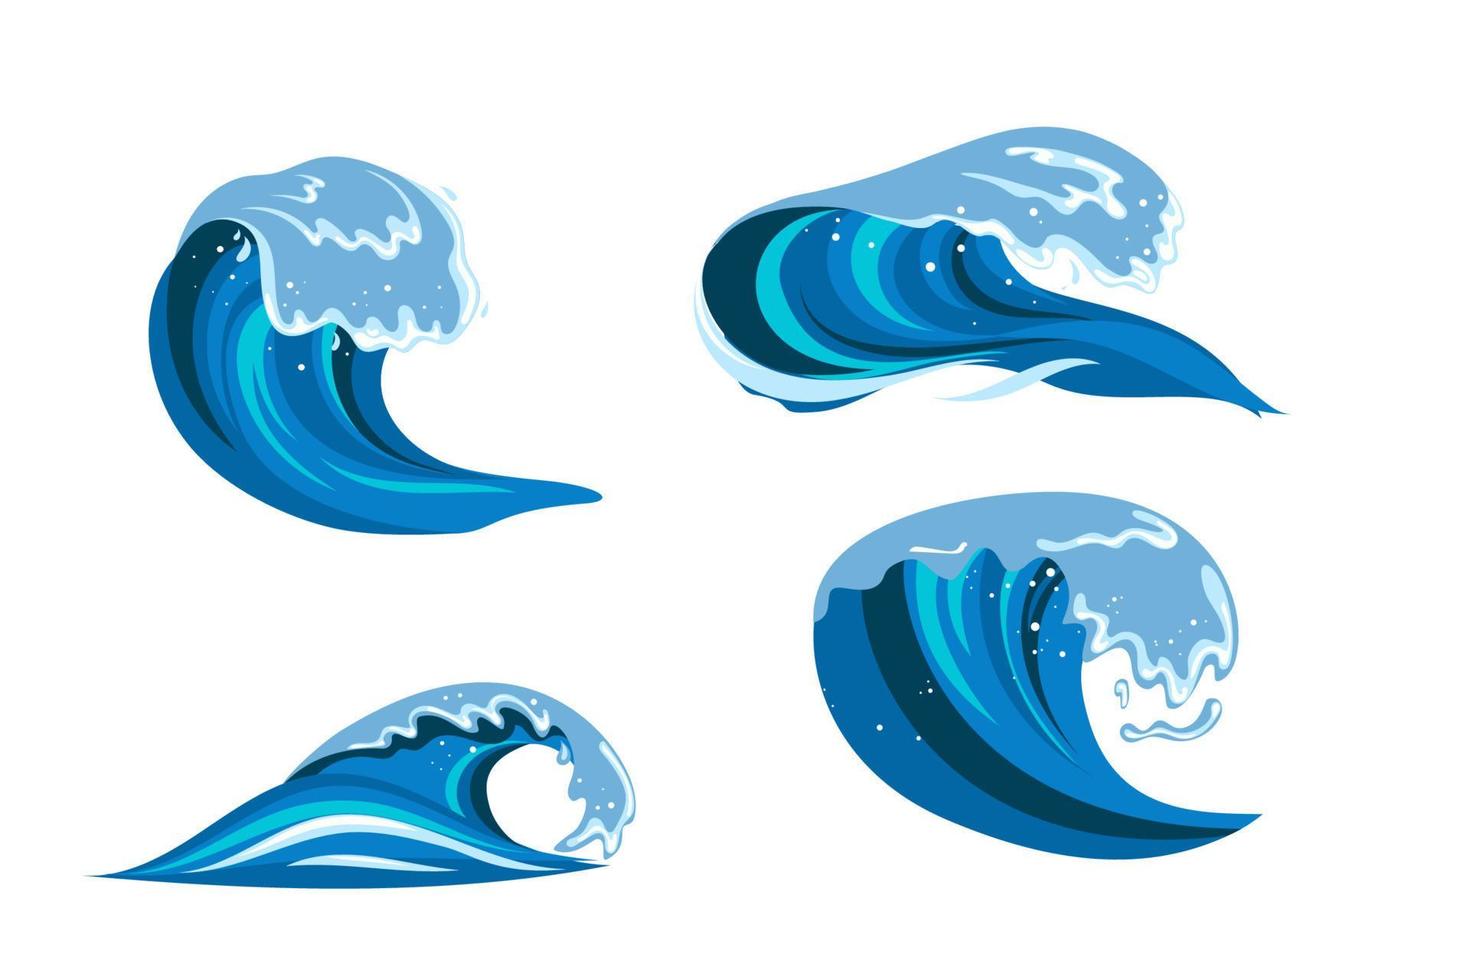 ola tsumani en estilo de dibujos animados planos. gran salpicadura de agua tropical azul con espuma blanca. ilustración vectorial aislado en fondo blanco vector